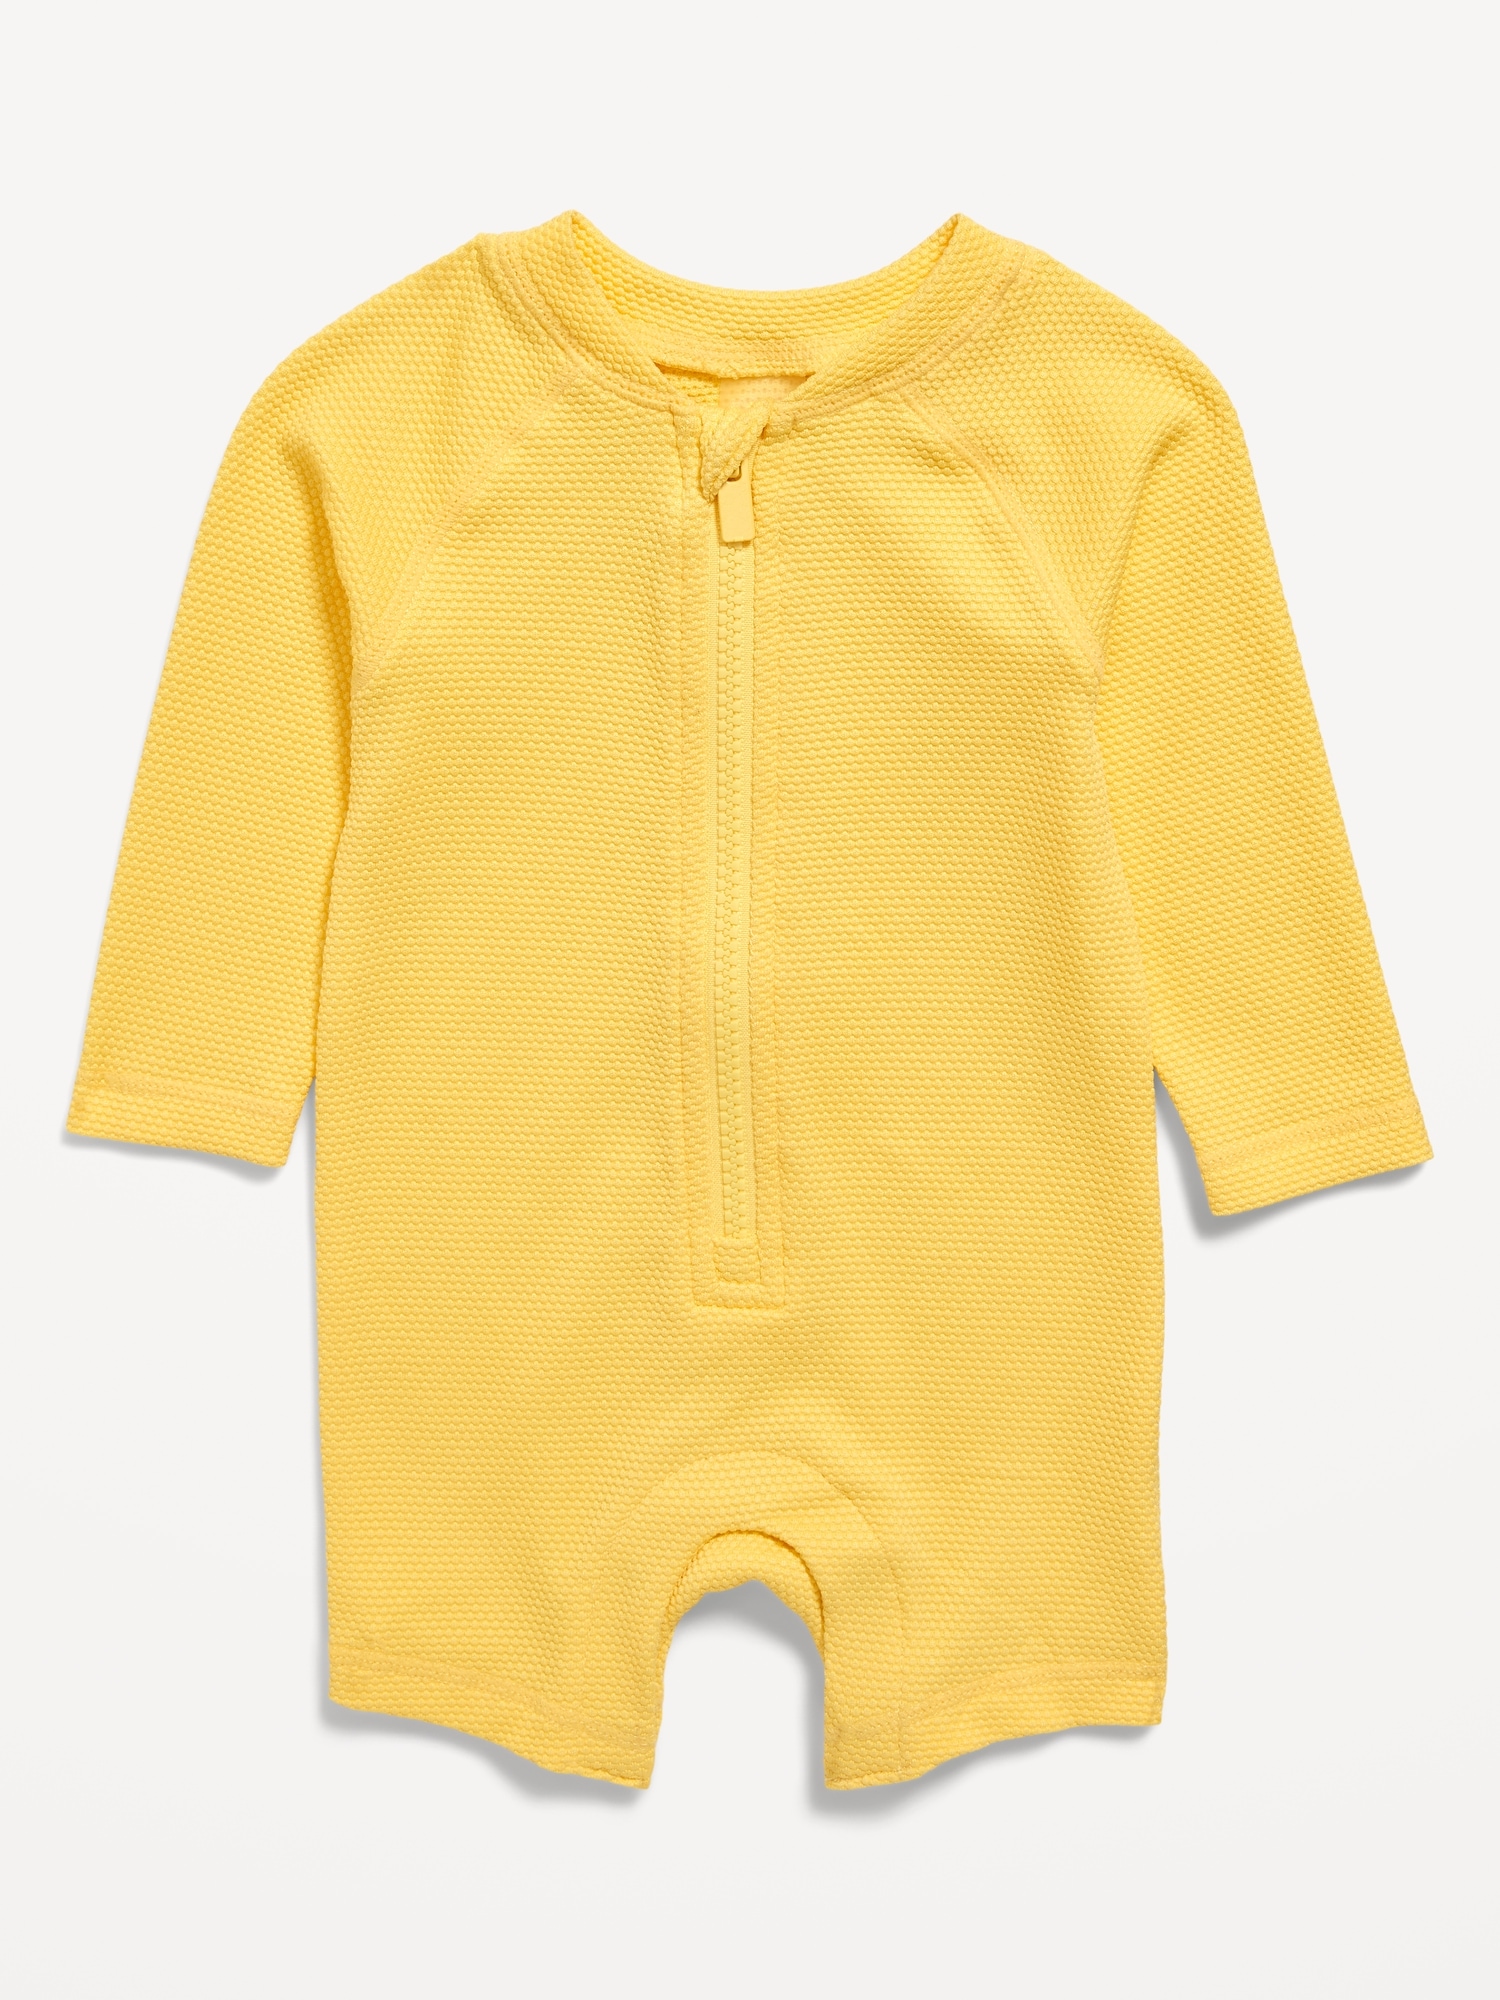 Unisex Printed Long-Sleeve Swim Rashguard Bodysuit for Baby